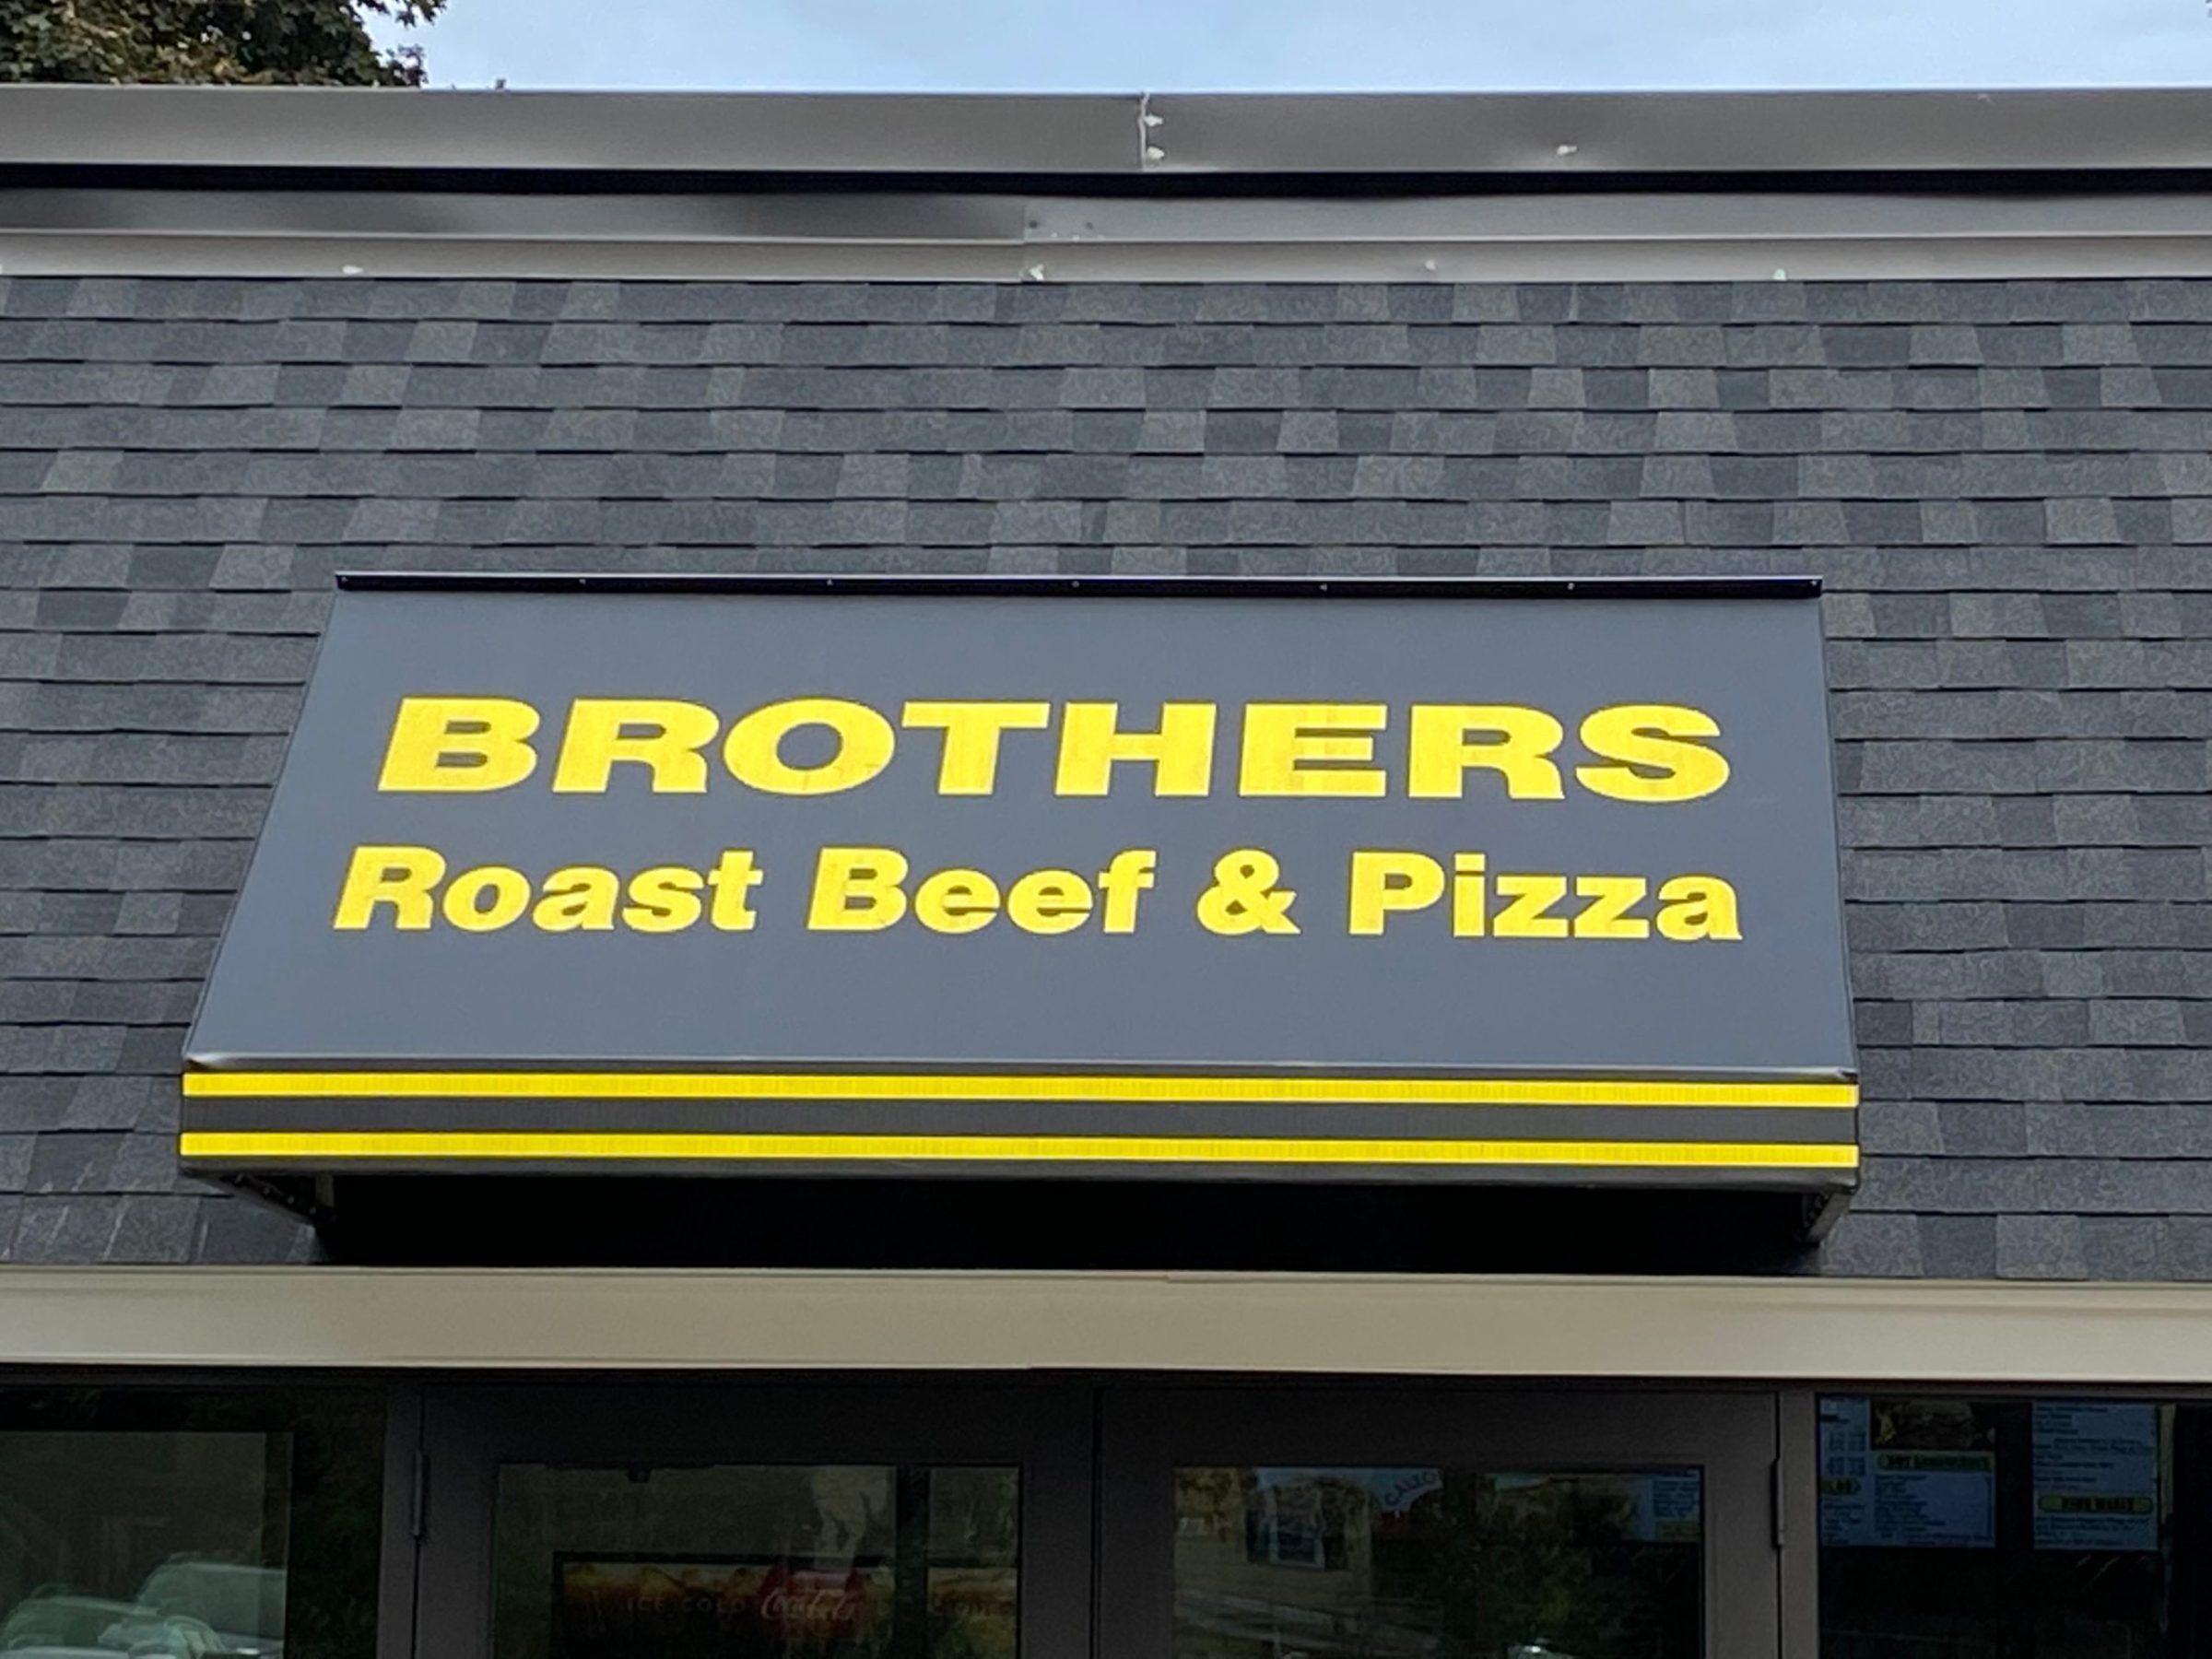 Brother roast beef